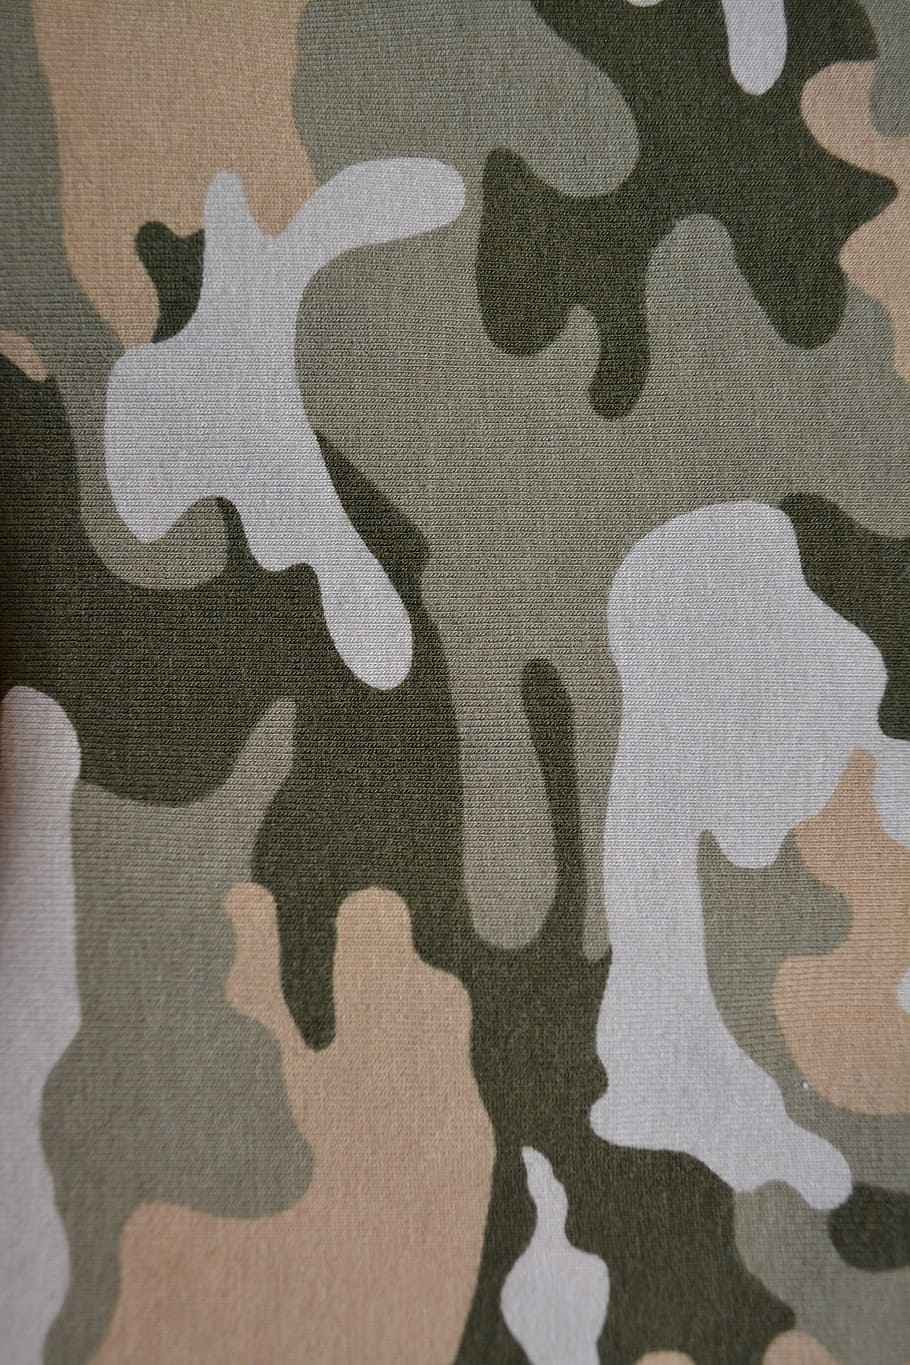 gris, negro, textil de camuflaje, patrón, camuflaje, militar, uniforme, textura, combate, fatiga